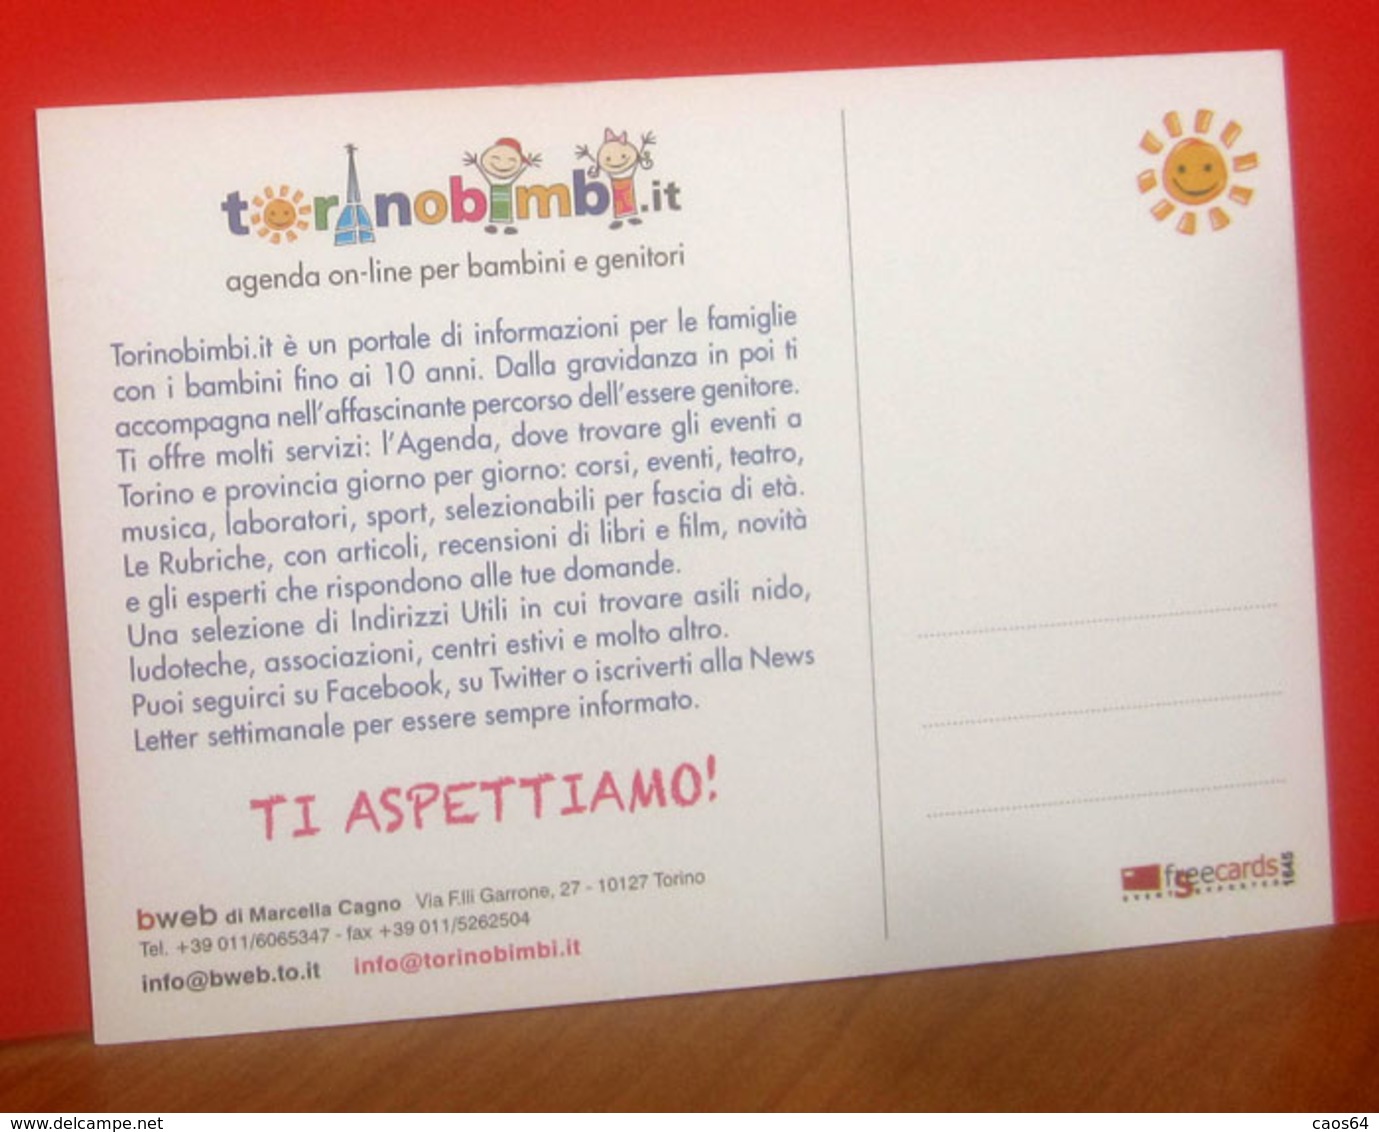 Torino Bimbi CARTOLINA  Pubblicità Freecards 1645 - Pubblicitari